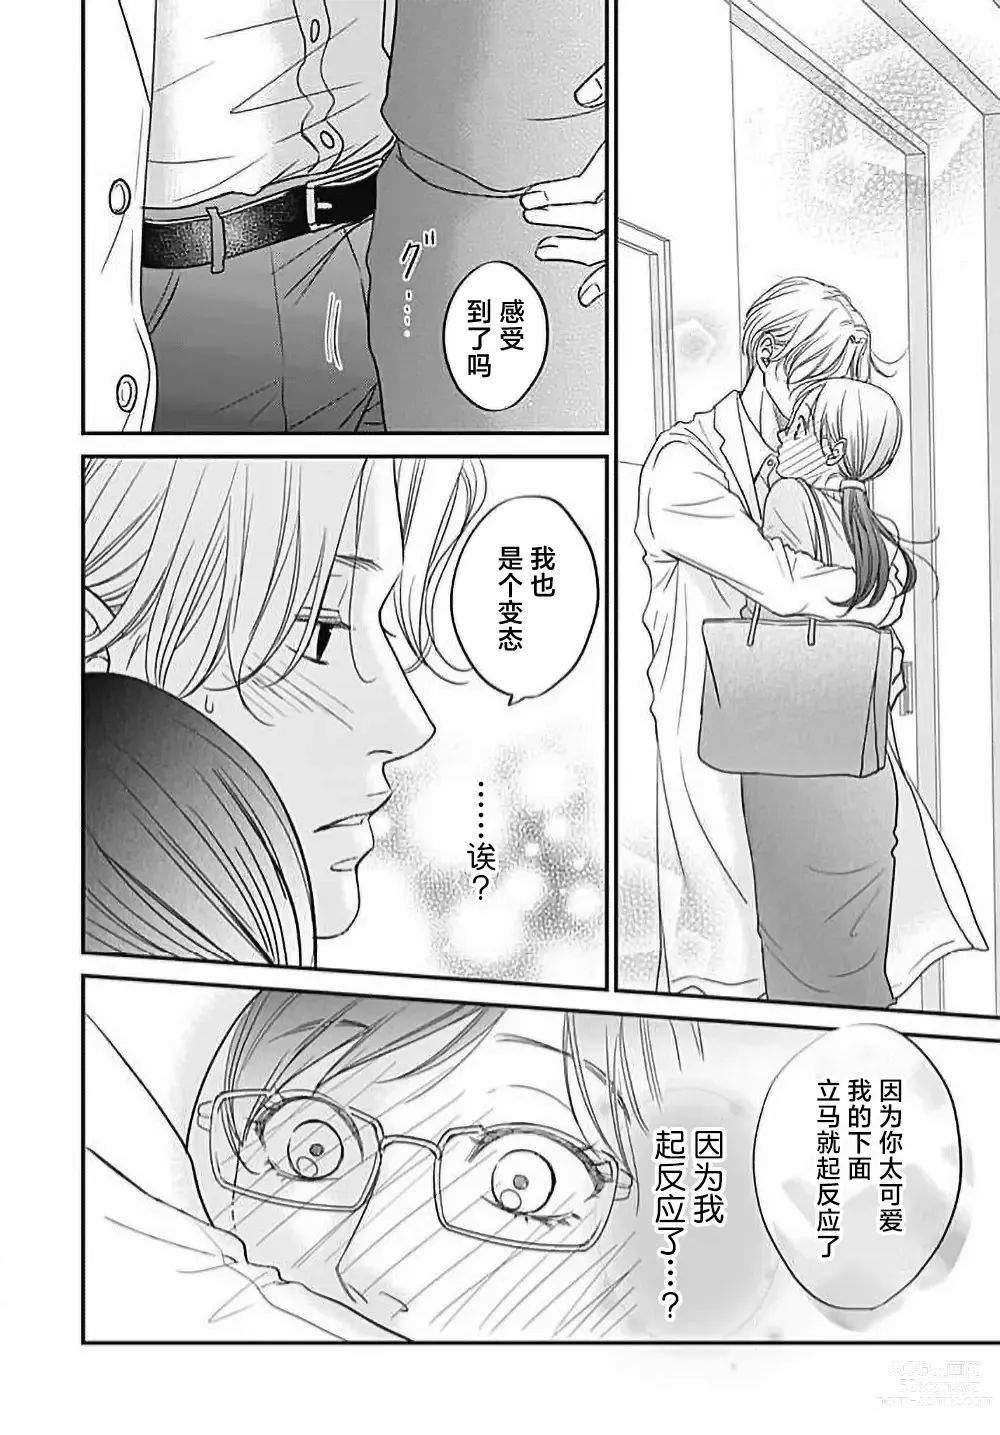 Page 31 of manga 今夜、于保健室甜蜜融化 1